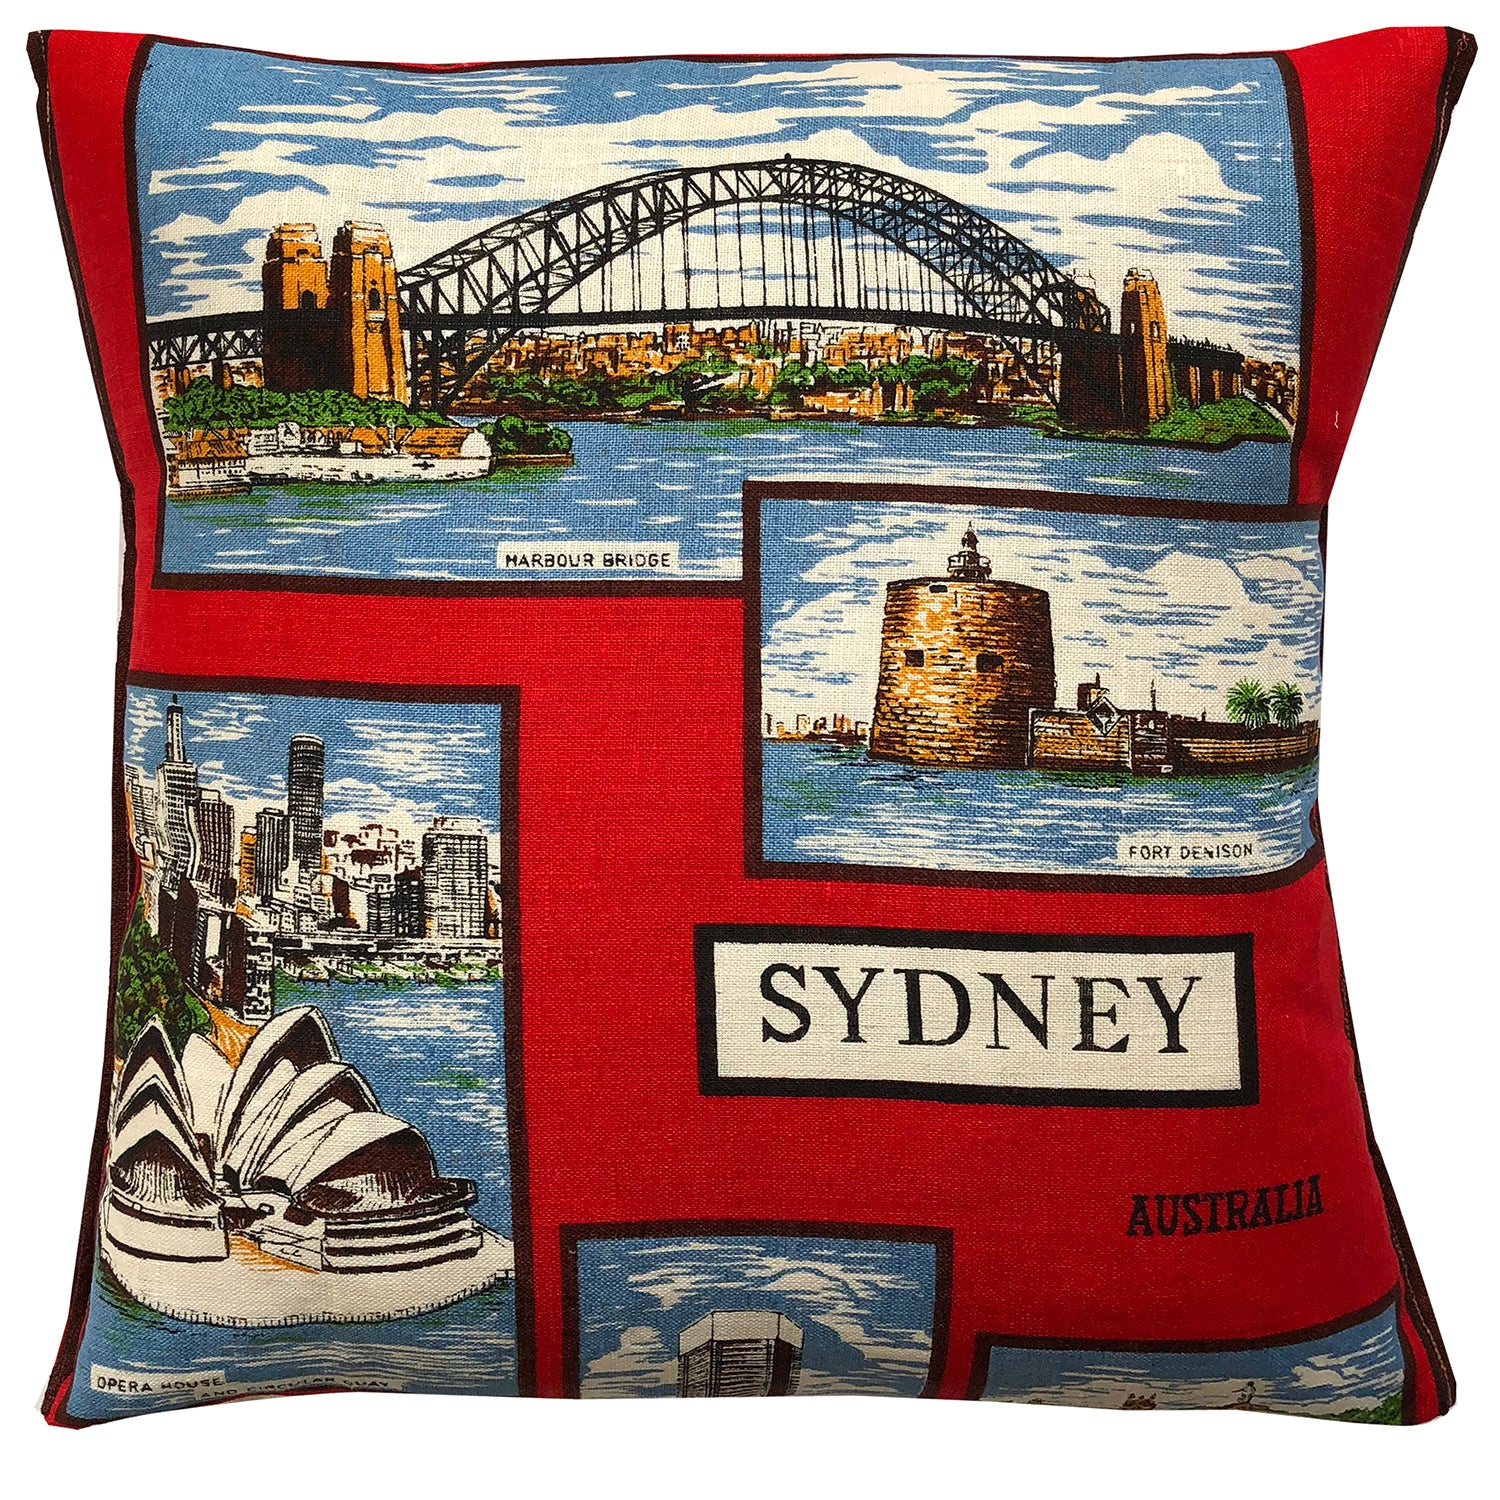 Sydney landmarks vintage linen teatowel cushion cover in red